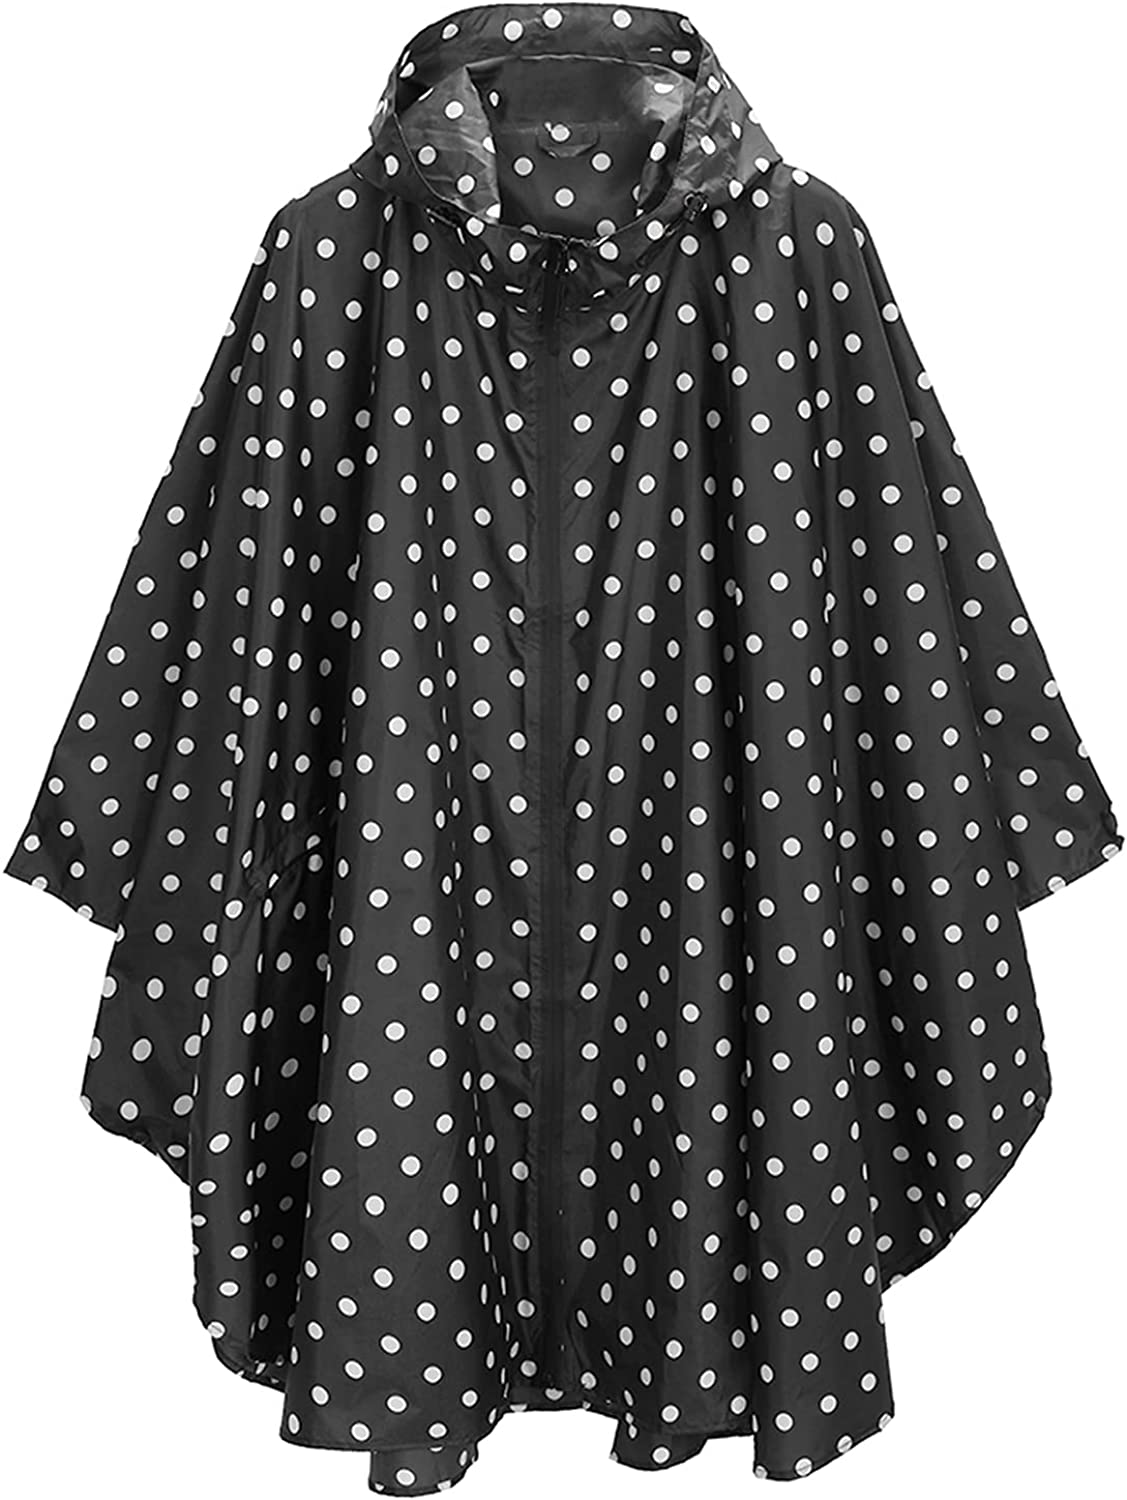 Rain Poncho Jacket Coat Hooded Zipper Style for Women/Men/Adult with Pocket